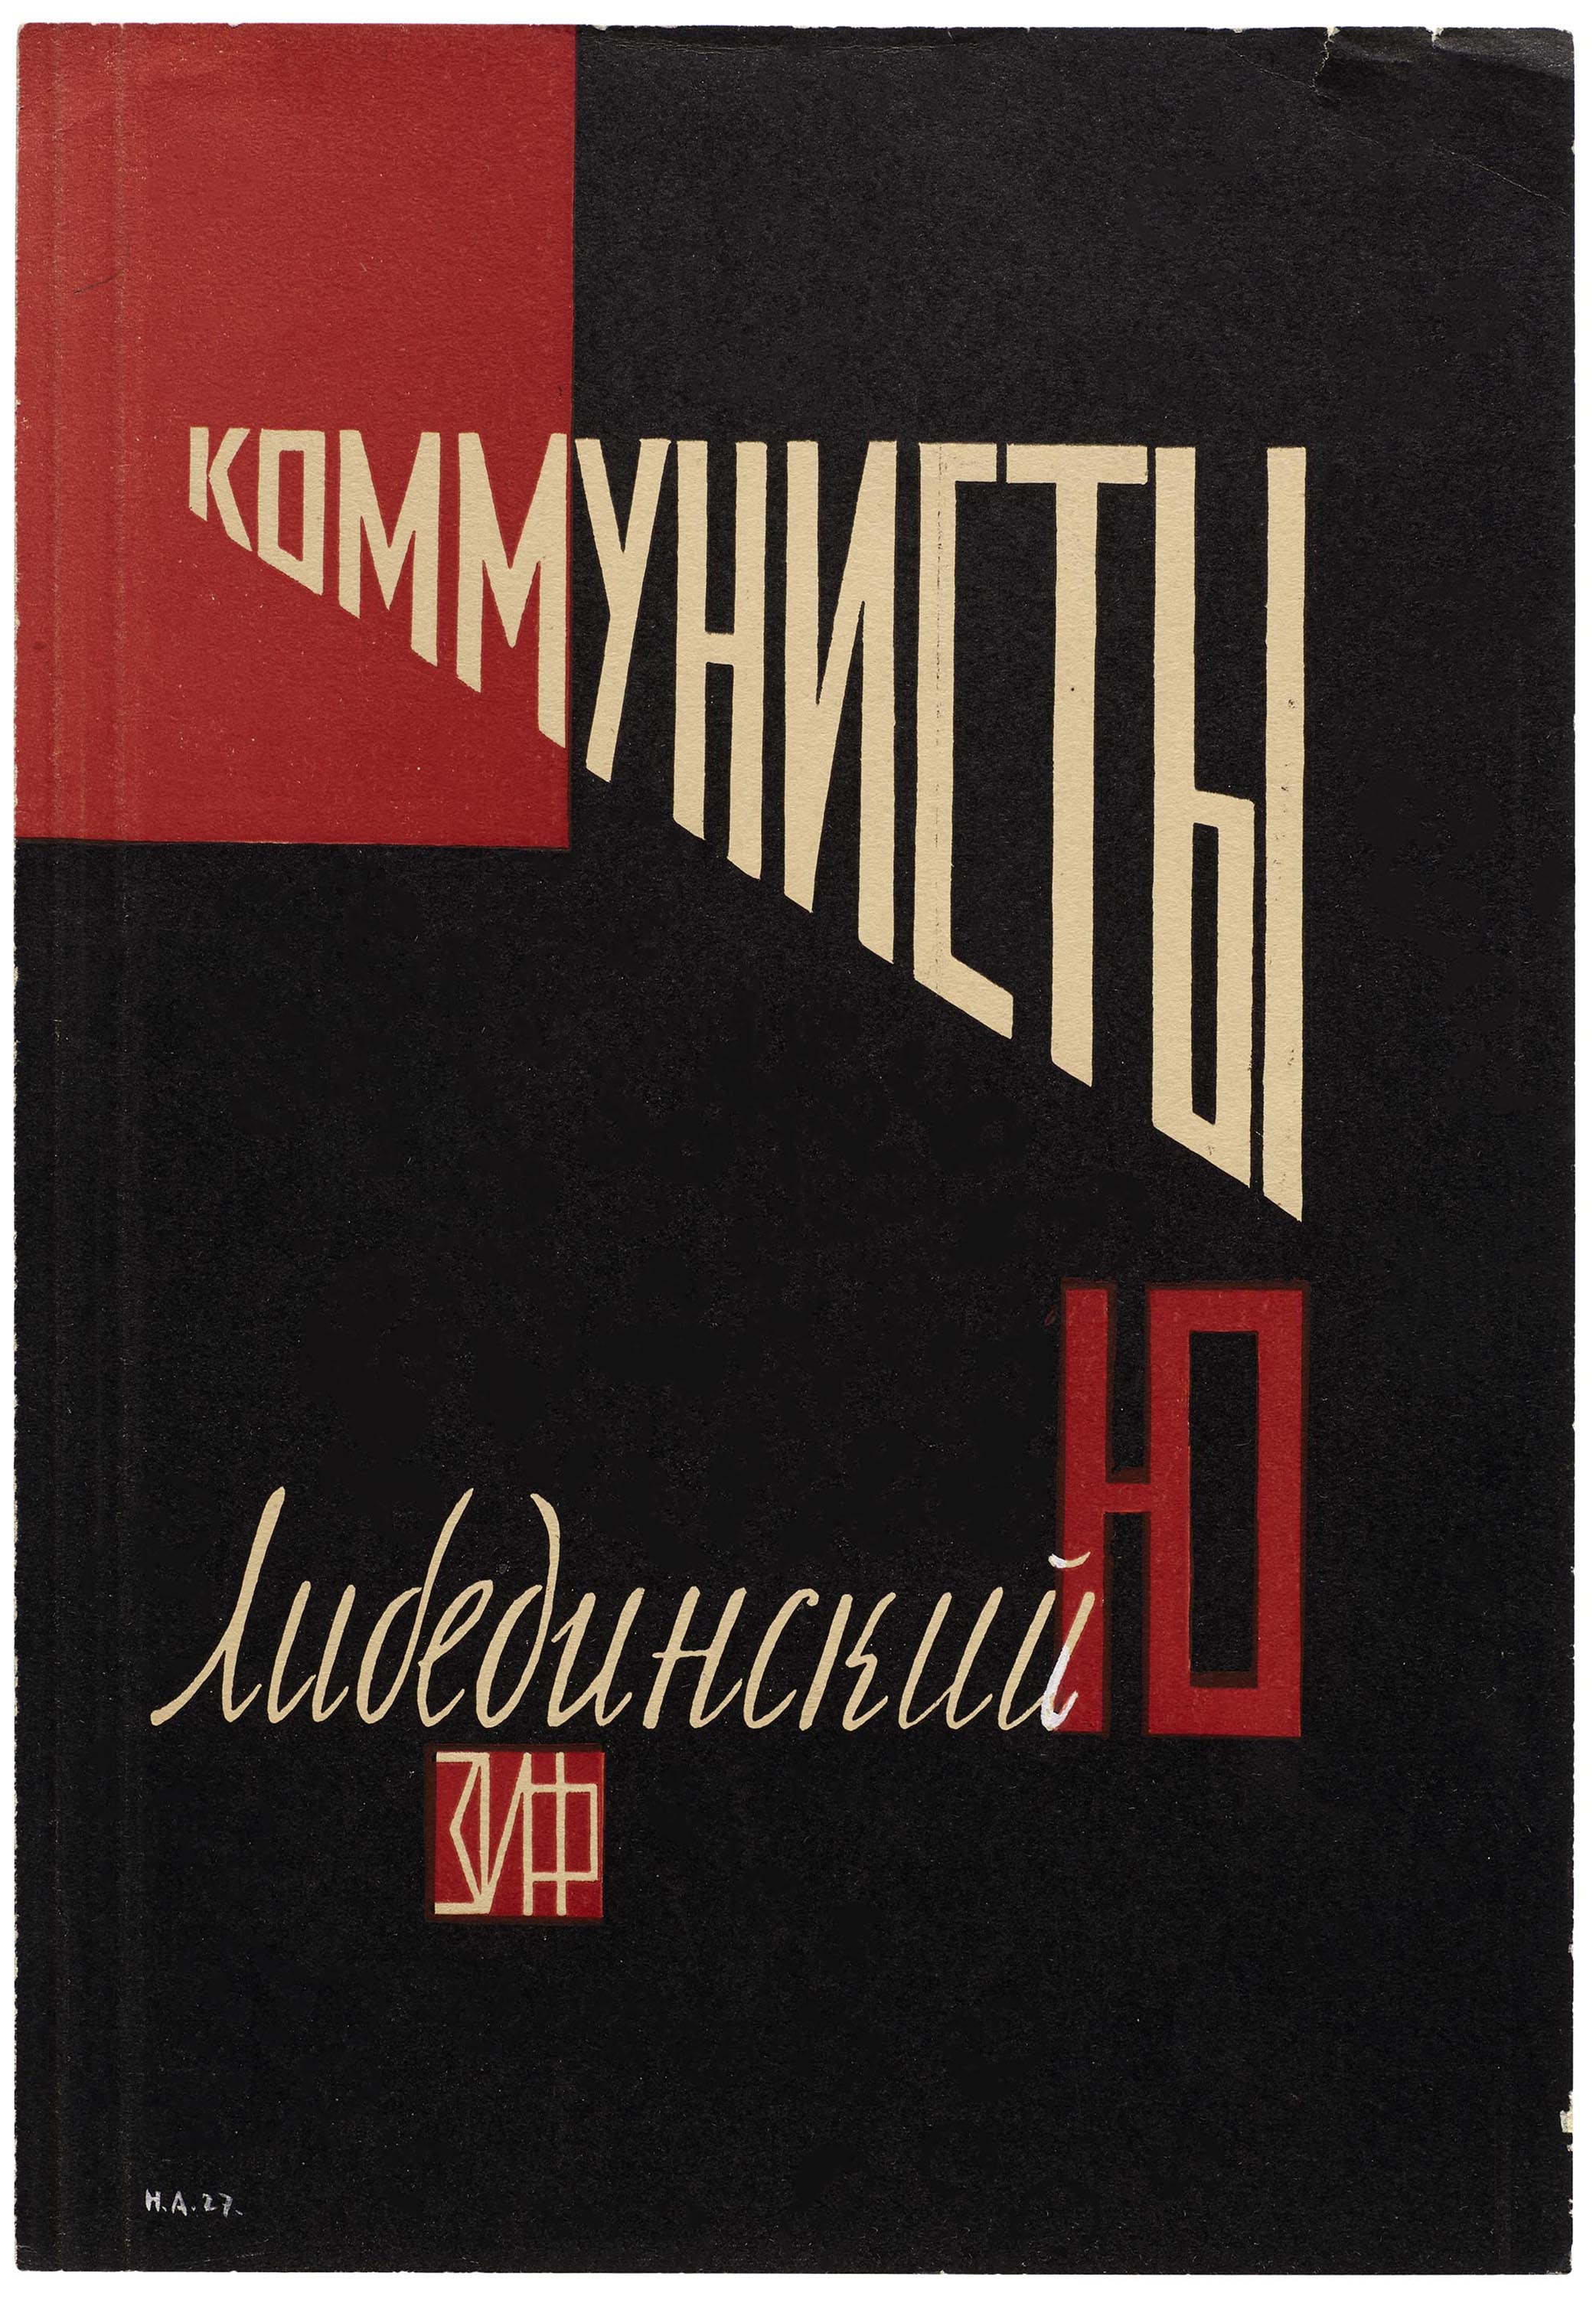 Proof print cover design by Natan Altman, Kommunisti by Yuri Libedinsky , 1927.